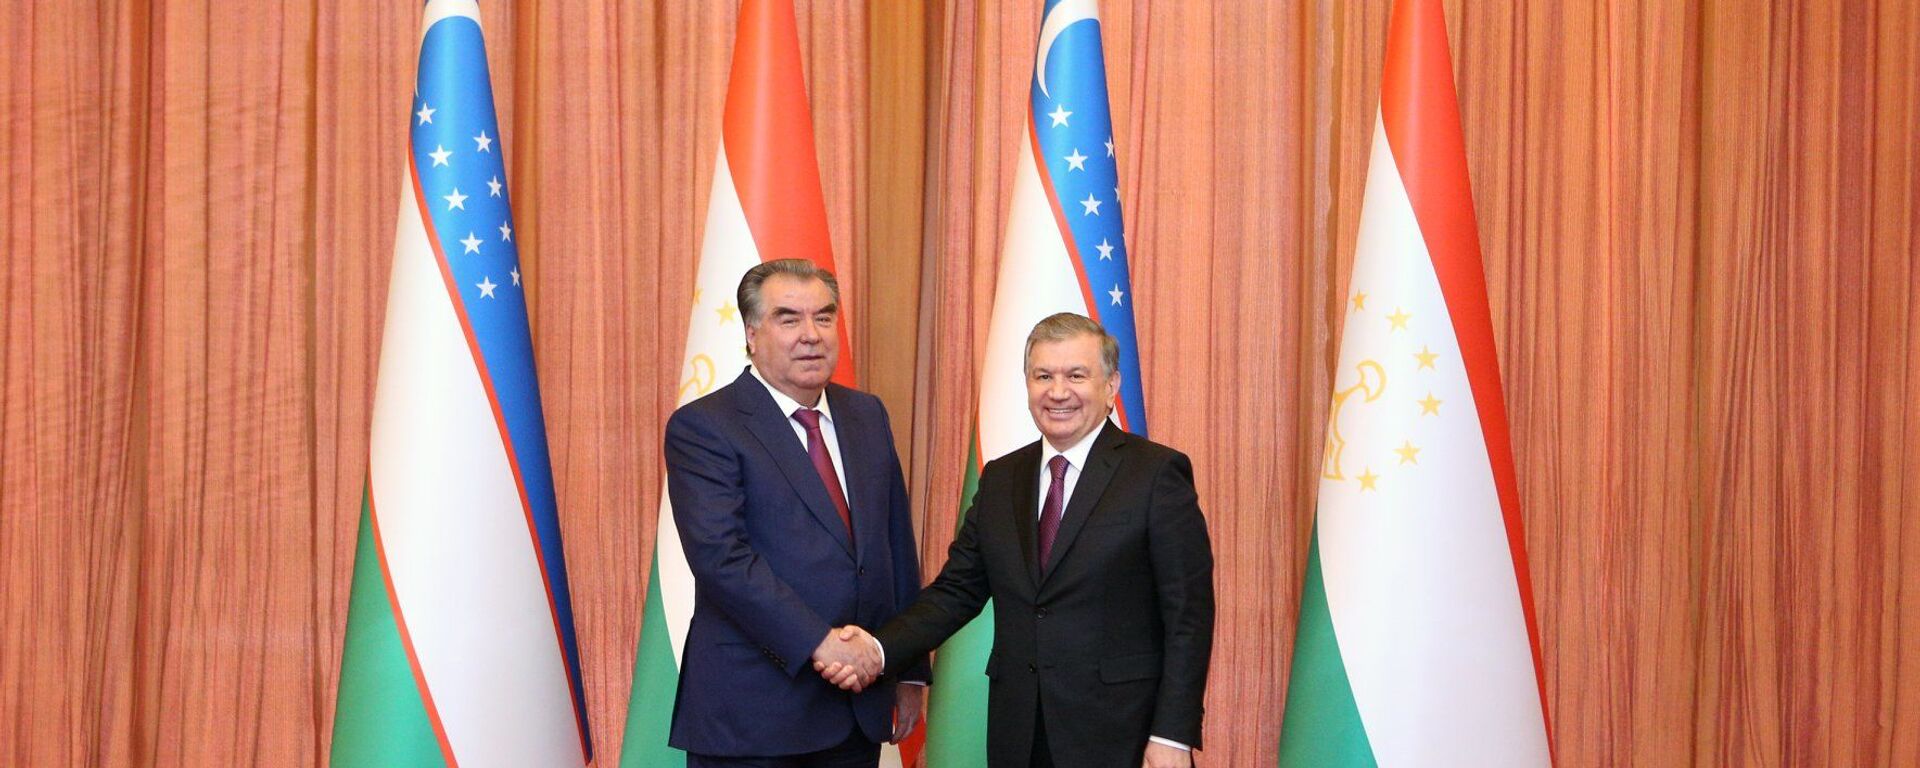 Президент Эмомали Рахмон и президент Узбекистана Шавкат Мирзиеев - Sputnik Таджикистан, 1920, 14.05.2021